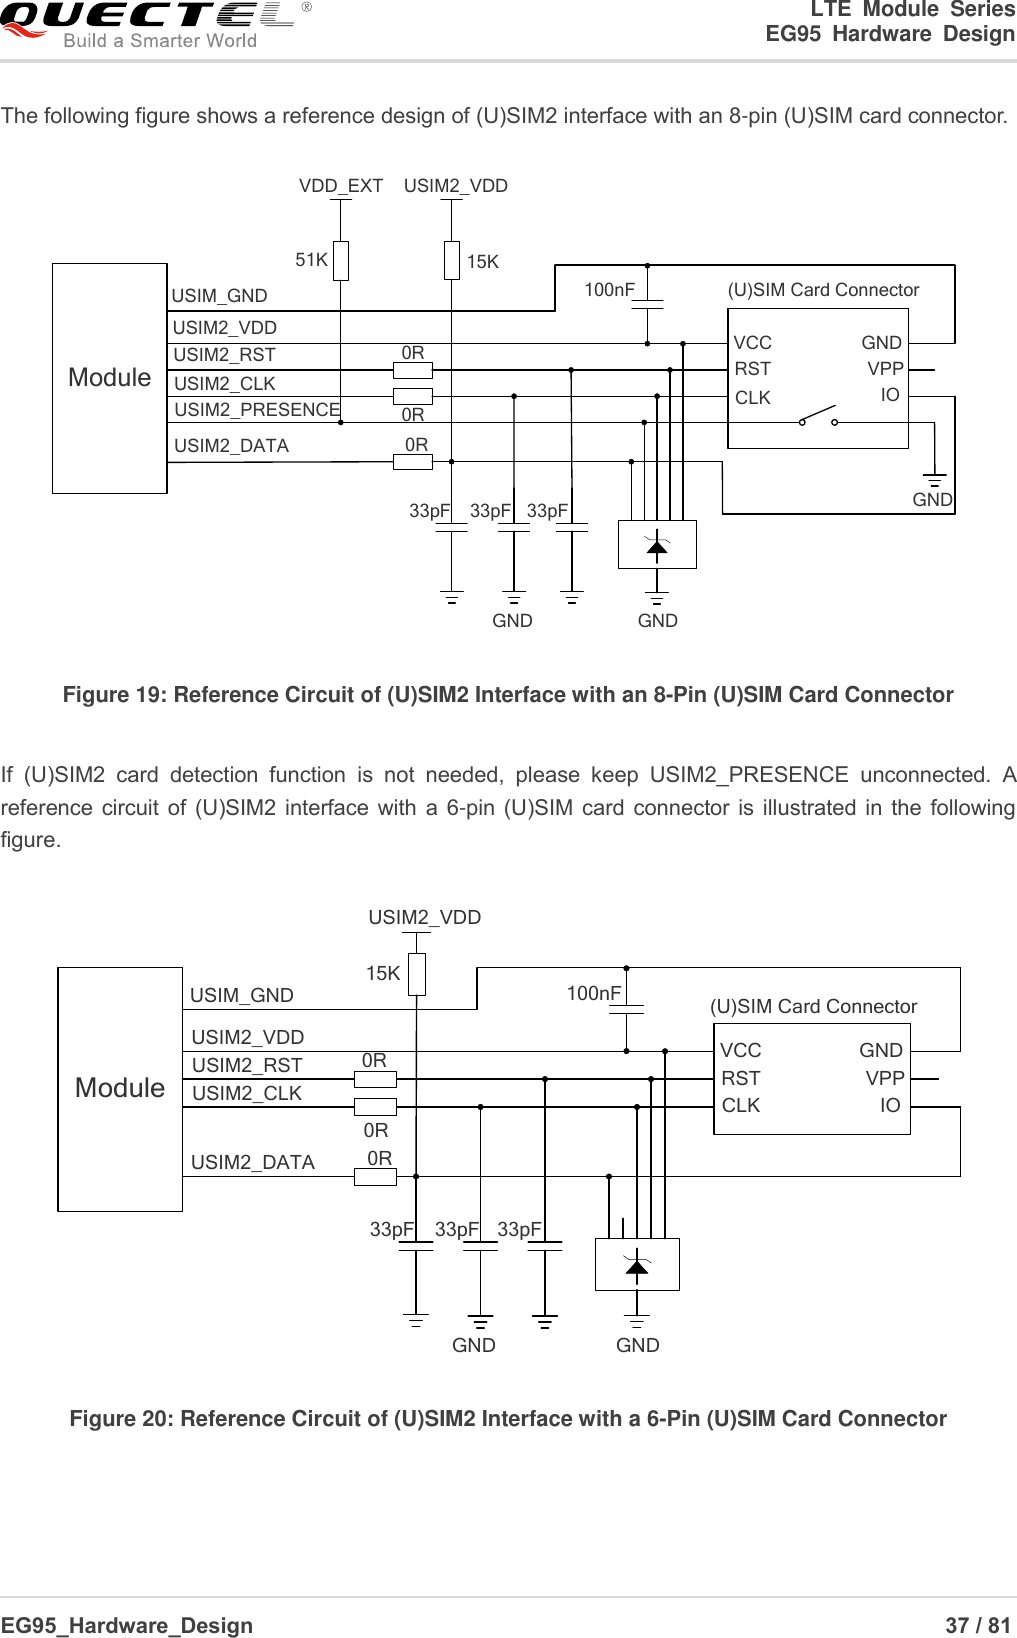 LTE  Module  Series                                                  EG95  Hardware  Design  EG95_Hardware_Design                                                                   37 / 81    The following figure shows a reference design of (U)SIM2 interface with an 8-pin (U)SIM card connector. ModuleUSIM2_VDDUSIM_GNDUSIM2_RSTUSIM2_CLKUSIM2_DATAUSIM2_PRESENCE0R0R0RVDD_EXT51K100nF (U)SIM Card ConnectorGNDGND33pF 33pF 33pFVCCRSTCLK IOVPPGNDGNDUSIM2_VDD15K Figure 19: Reference Circuit of (U)SIM2 Interface with an 8-Pin (U)SIM Card Connector  If  (U)SIM2  card  detection  function  is  not  needed,  please  keep  USIM2_PRESENCE  unconnected.  A reference circuit of  (U)SIM2  interface  with a  6-pin (U)SIM  card  connector  is  illustrated in  the following figure. ModuleUSIM2_VDDUSIM_GNDUSIM2_RSTUSIM2_CLKUSIM2_DATA 0R0R0R100nF (U)SIM Card ConnectorGND33pF 33pF 33pFVCCRSTCLK IOVPPGNDGND15KUSIM2_VDD Figure 20: Reference Circuit of (U)SIM2 Interface with a 6-Pin (U)SIM Card Connector    